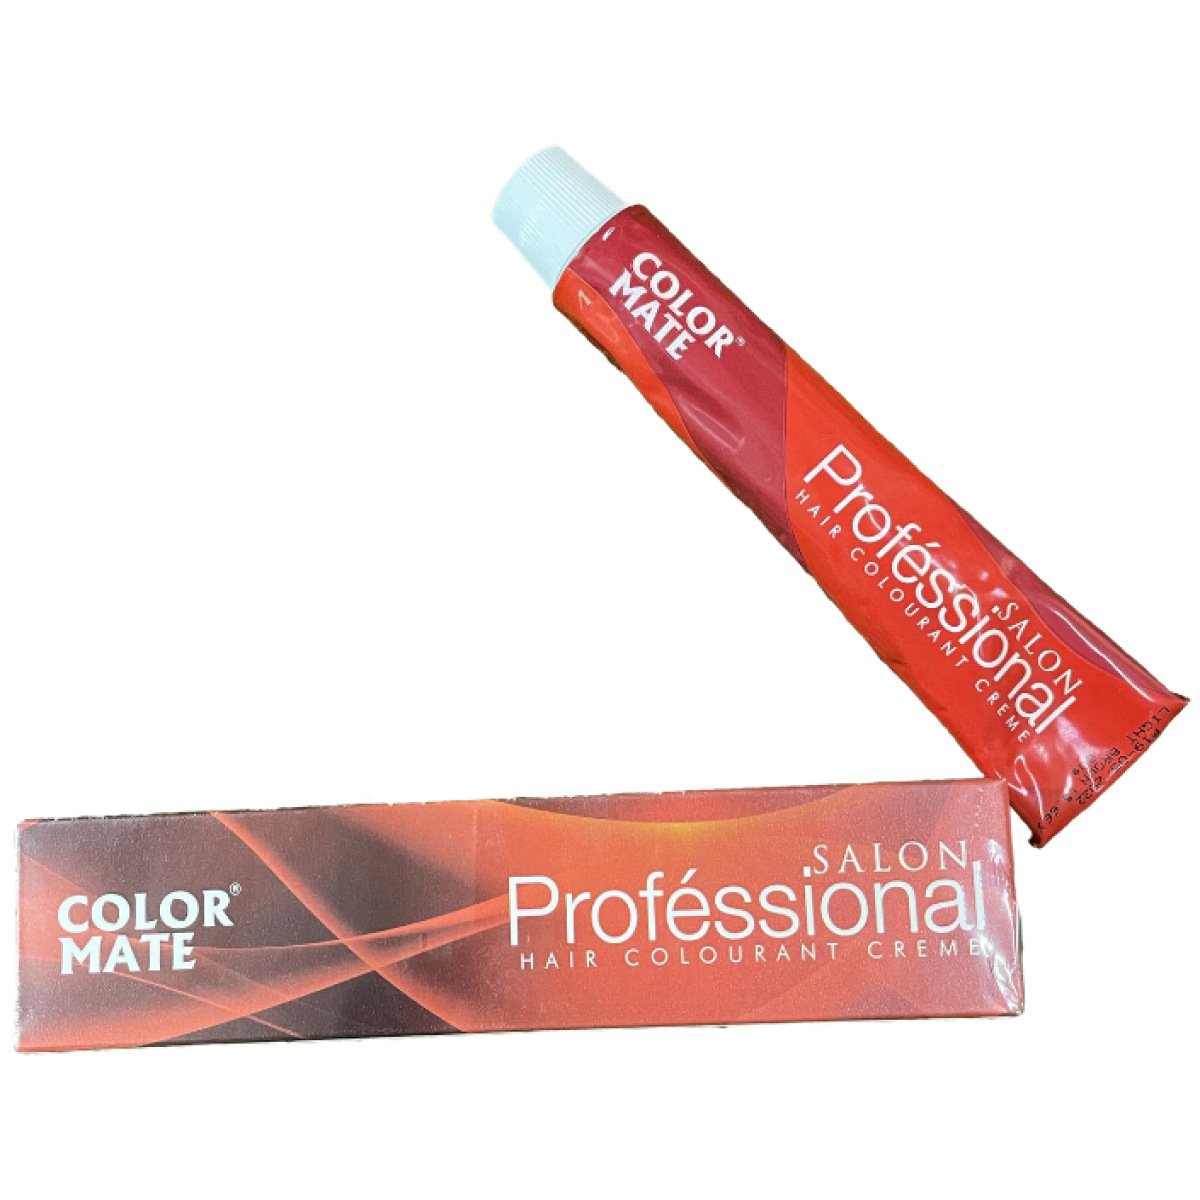 Color Mate Salon Professional Hair Colourant Creme Natural Black 1.0 80gm